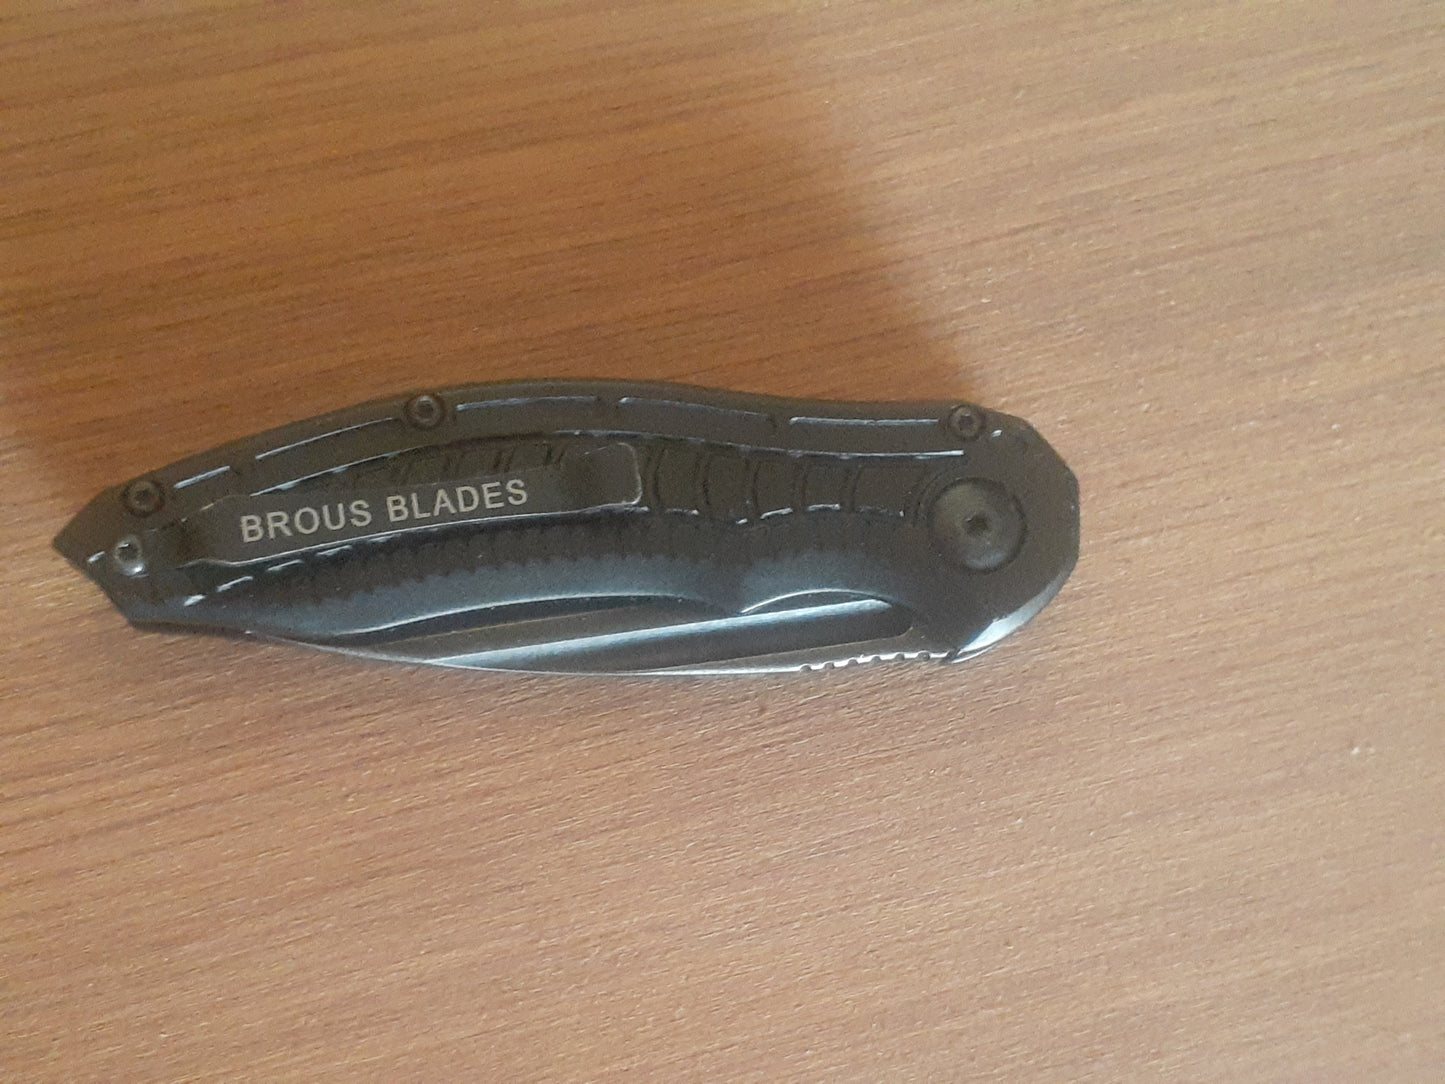 Brous Blades Bionic Blackout Automatic Pocket Knife